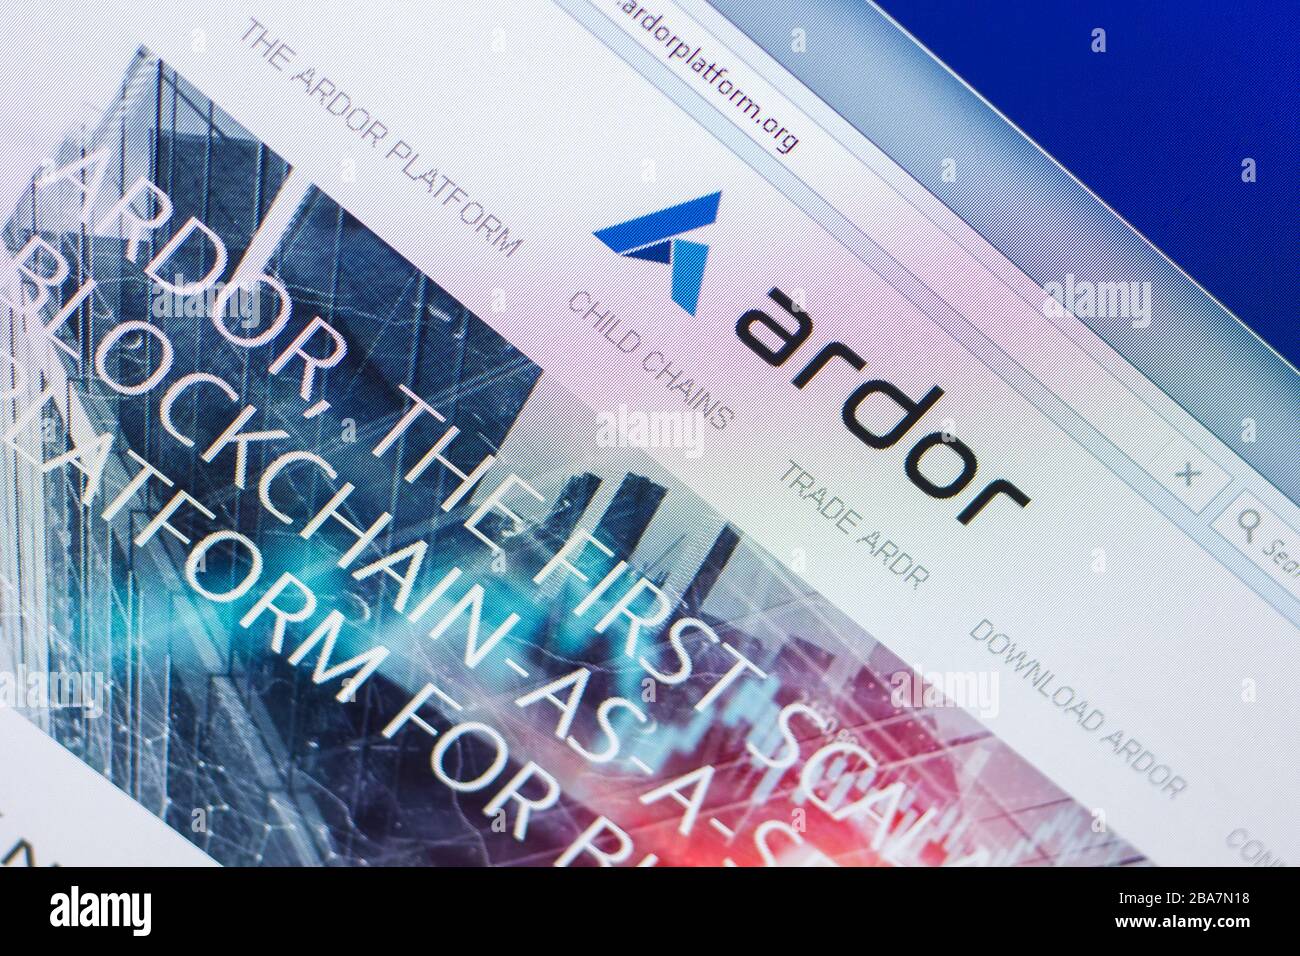 Ryazan, Russia - 29 marzo 2018 - Homepage di ardor cripto valuta su un display di PC, indirizzo web - ardorplatform.org Foto Stock